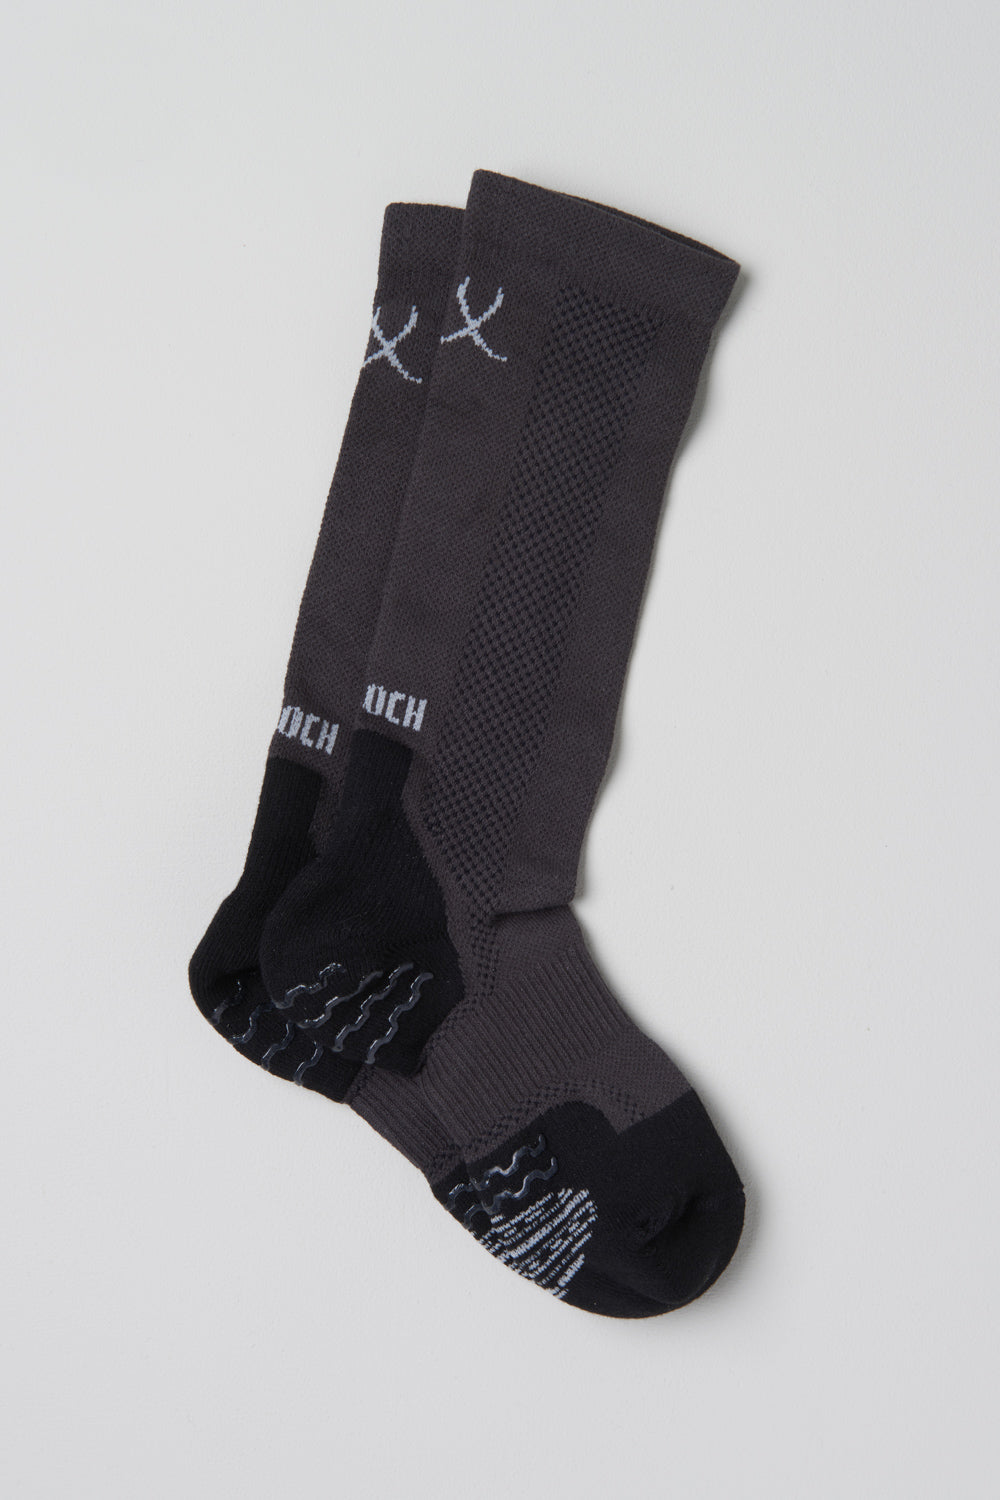 Bloch Adult Black Blochsox Dance Crew Socks, Size M W 7.5-9.5 M 6-8  889162525893